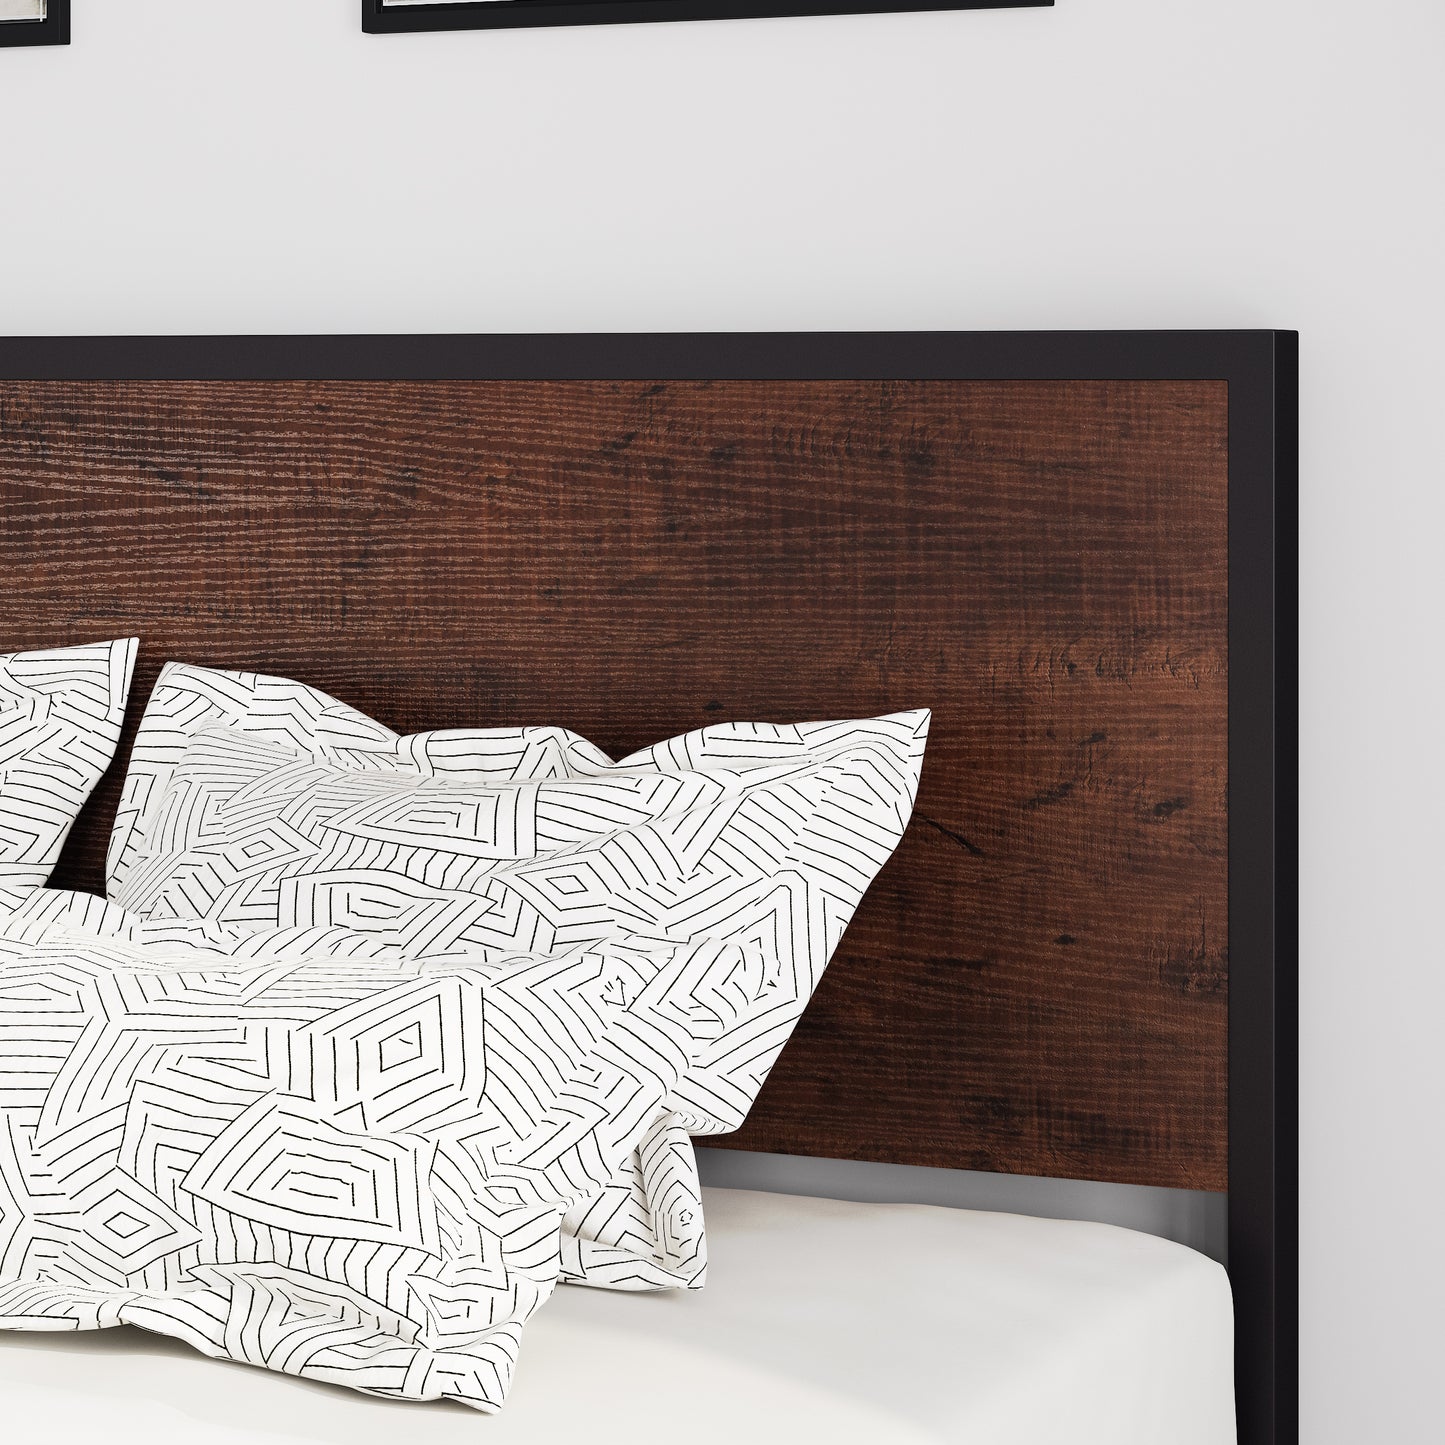 Allewie Heavy Duty Bed Frame with Sanders Headboard, Engineered Wood, 12'' Under Bed Storage